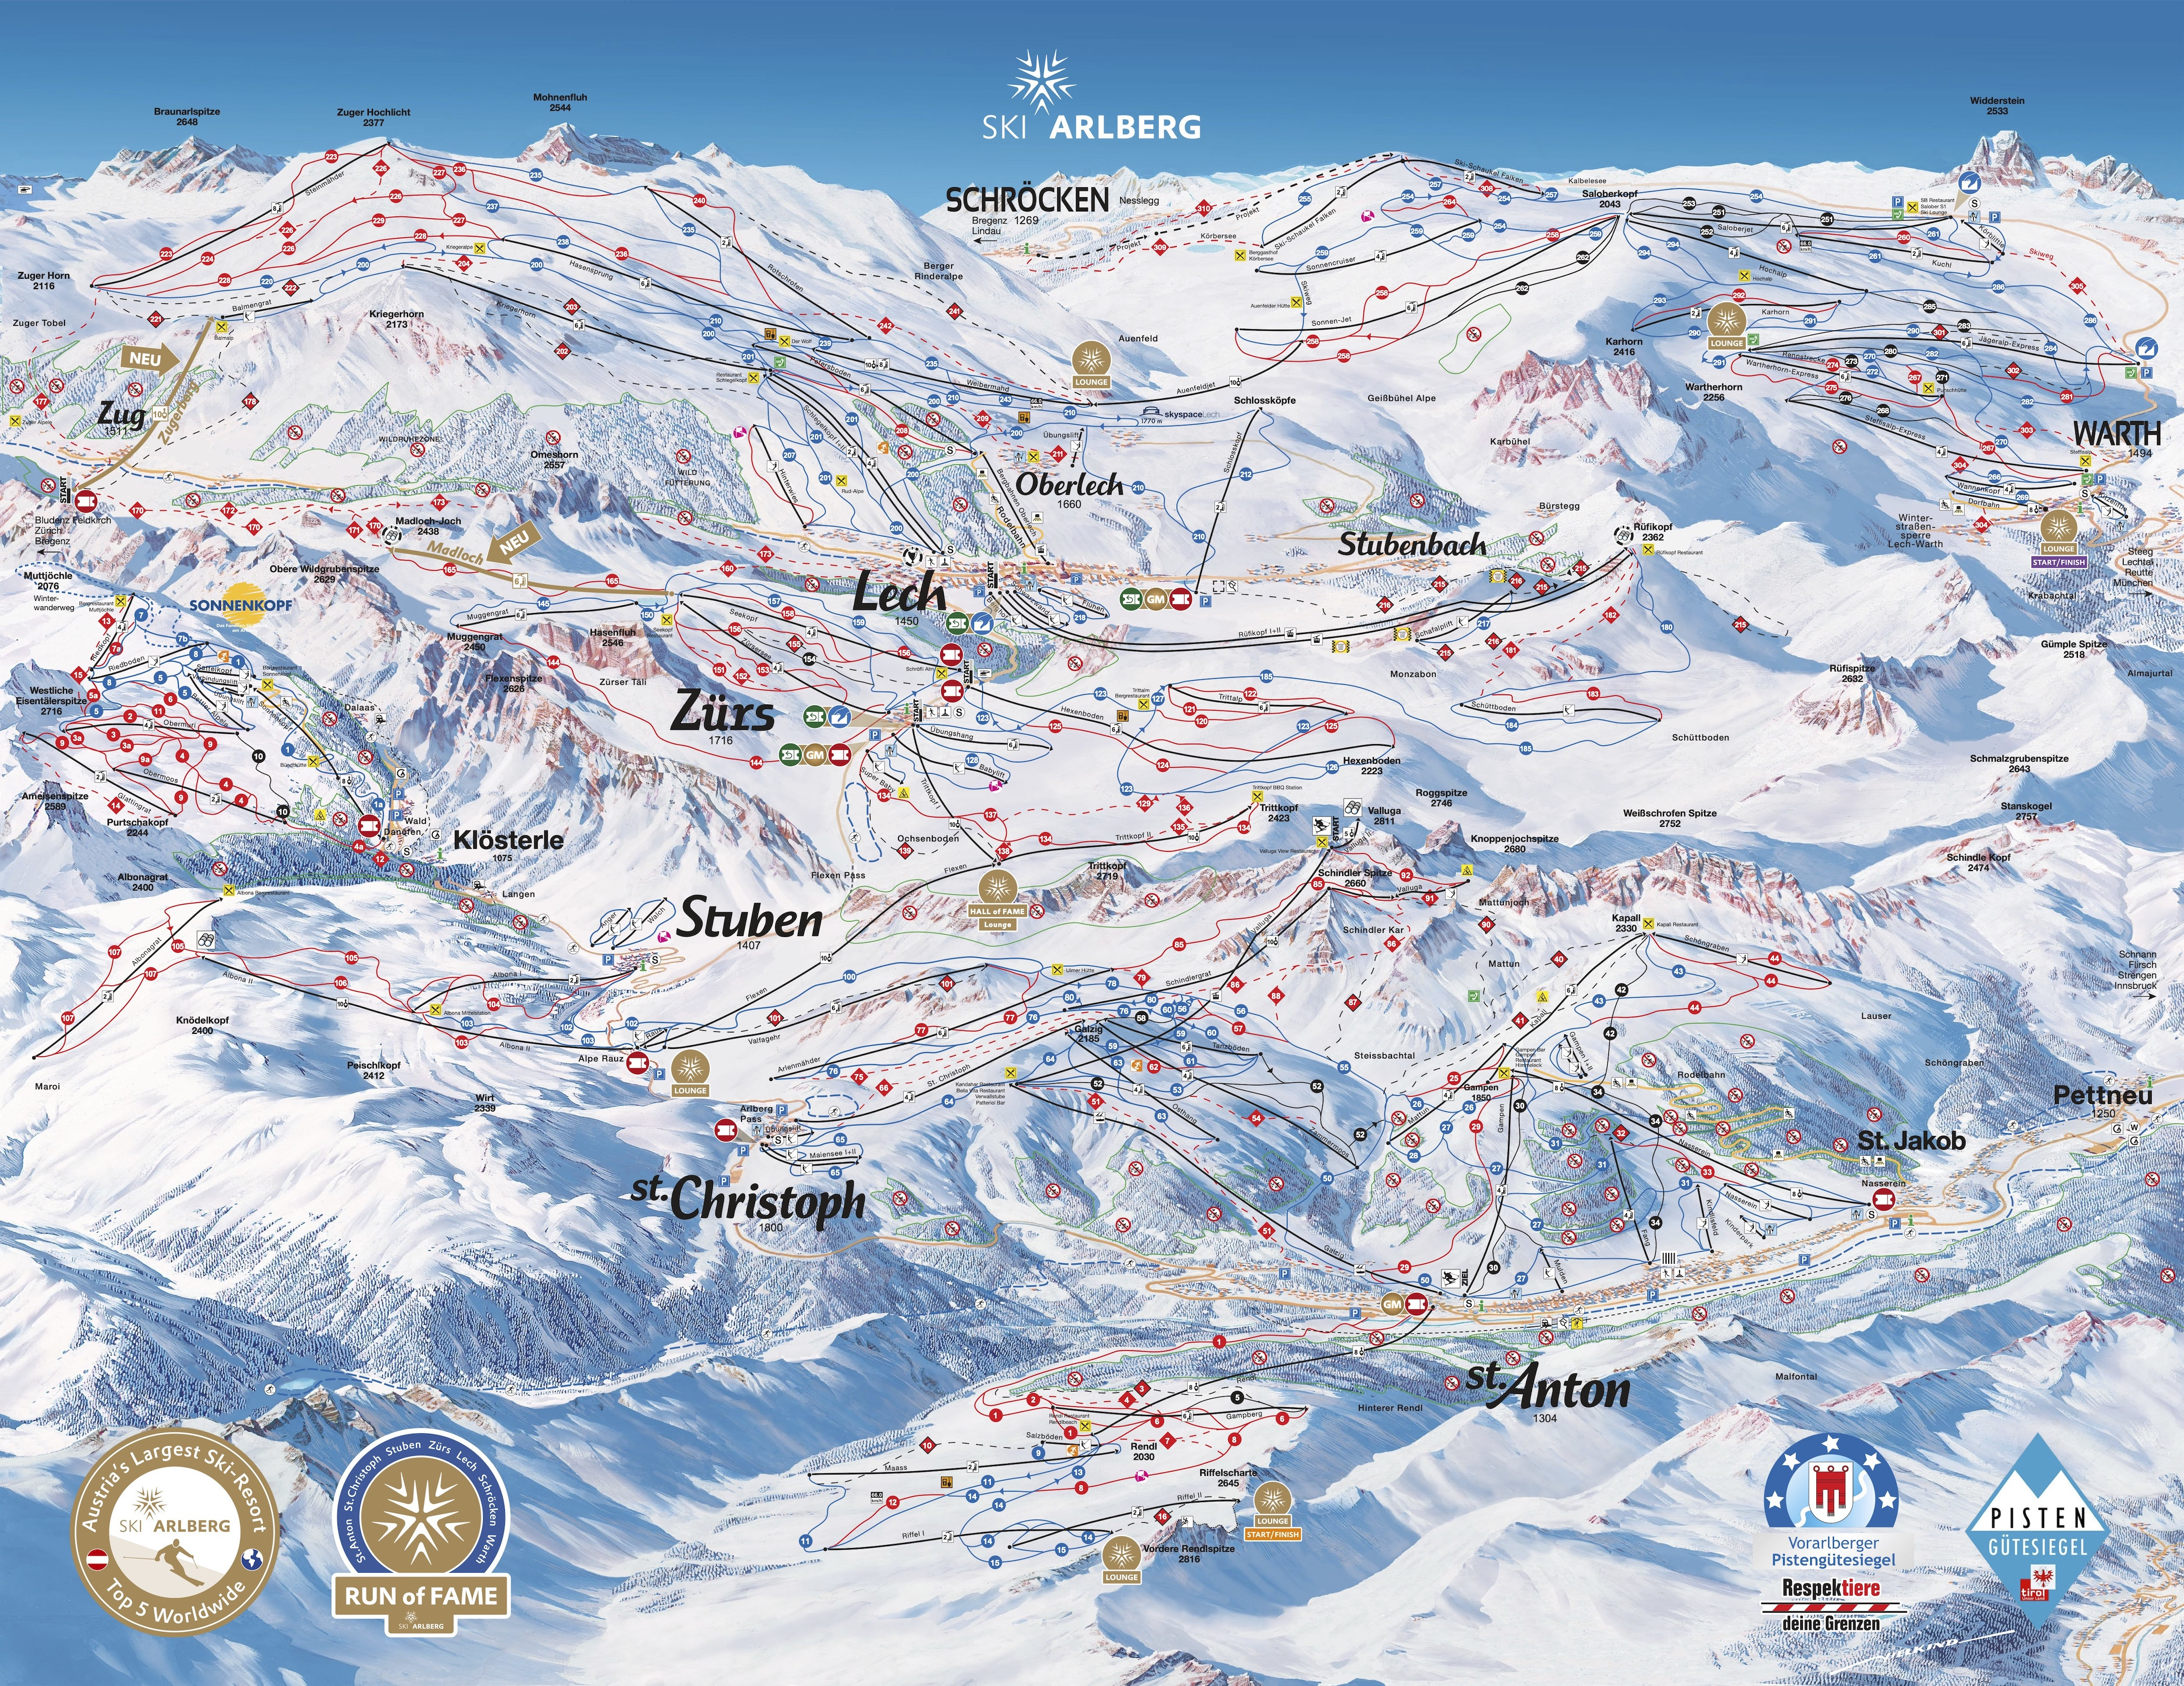 Pistenplan von St. Anton (Ski Arlberg)